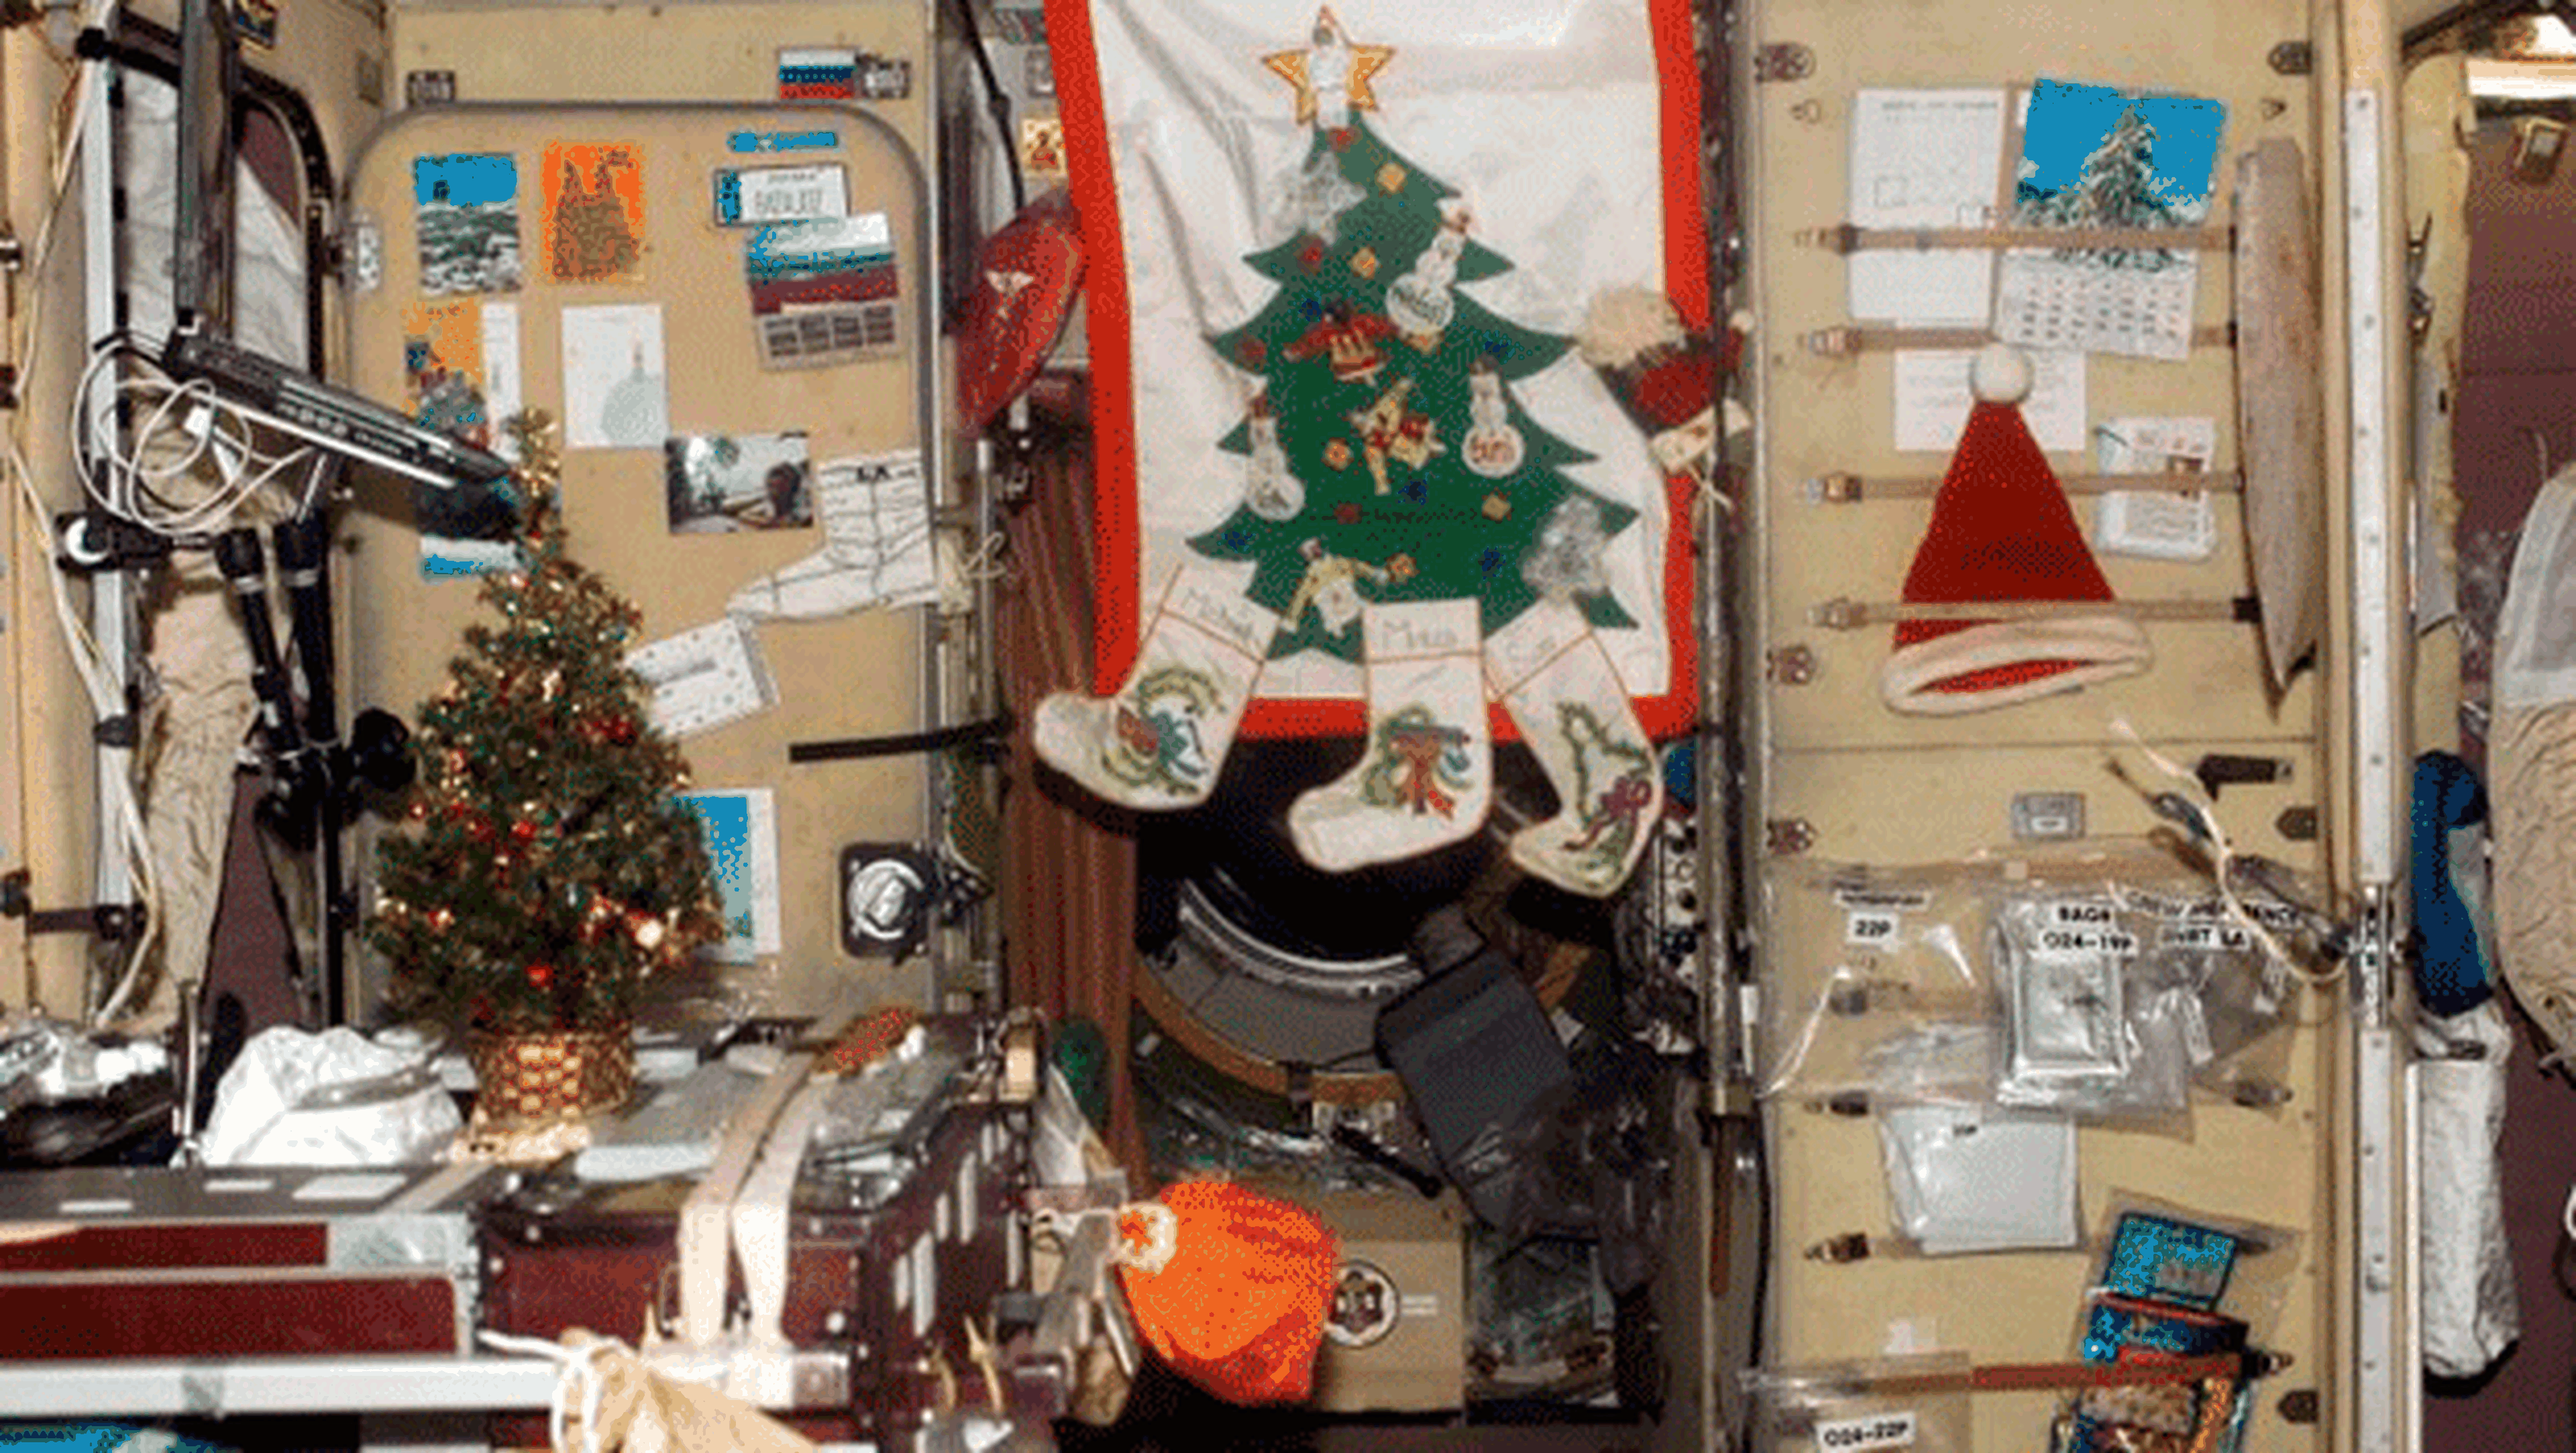 NASA decoración Navidad celebración astronautas